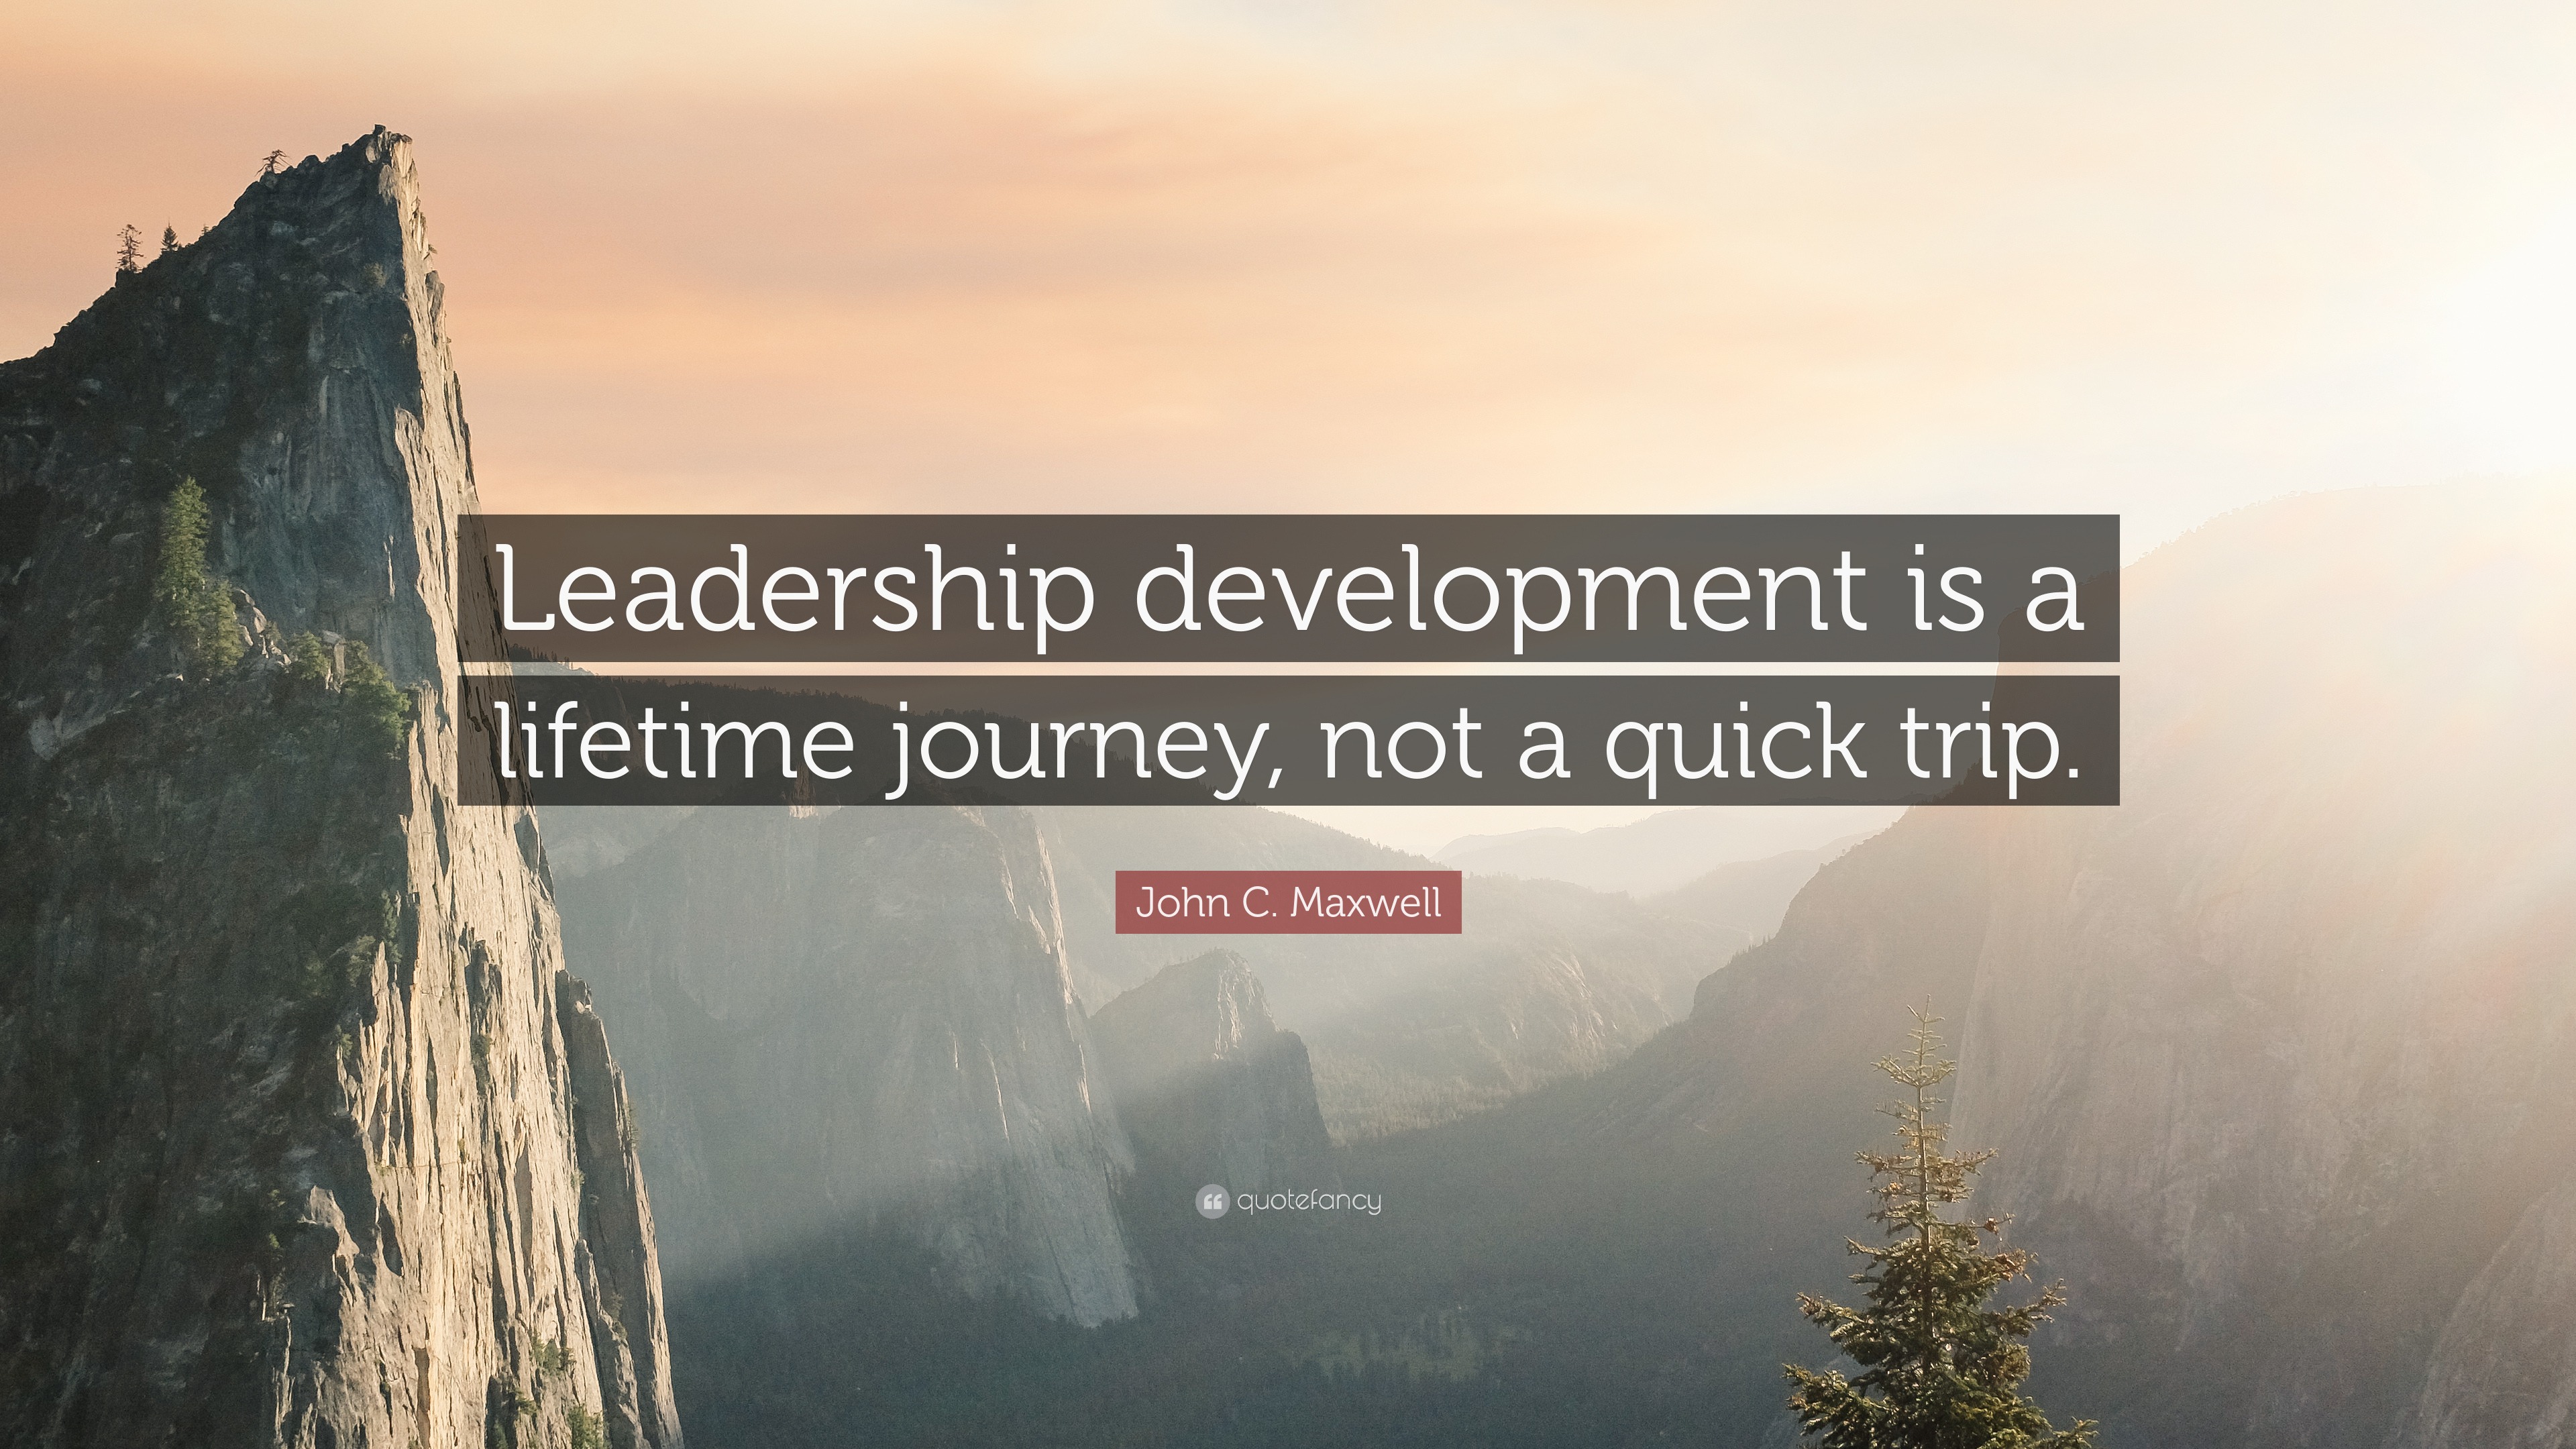 John C. Maxwell Quote: “Leadership development is a lifetime journey